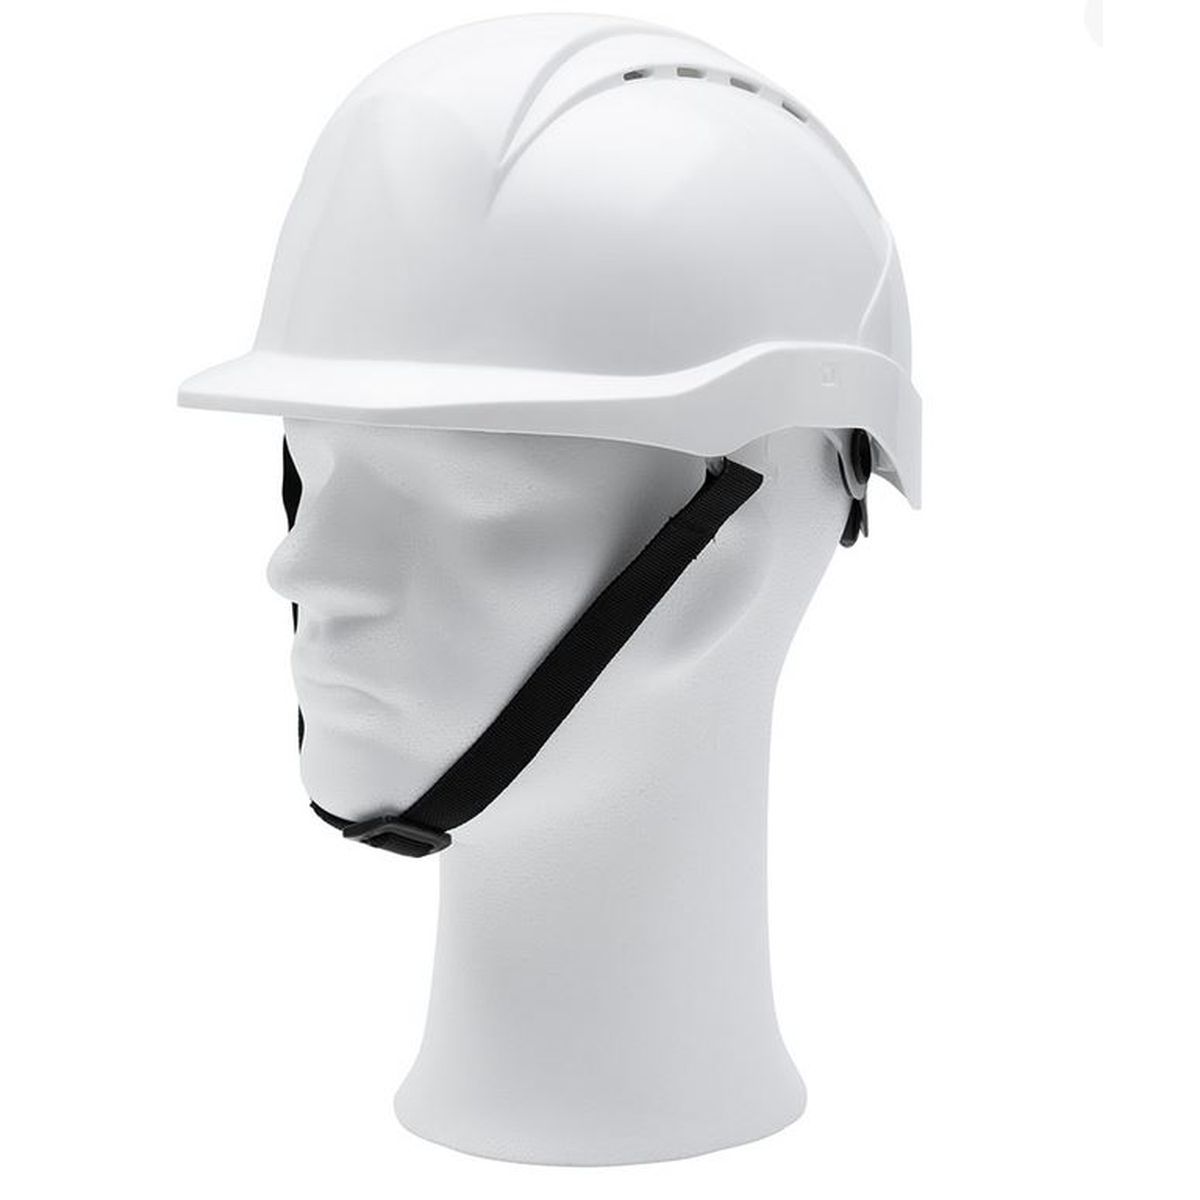 Kinnriemen für Tector® Helme  